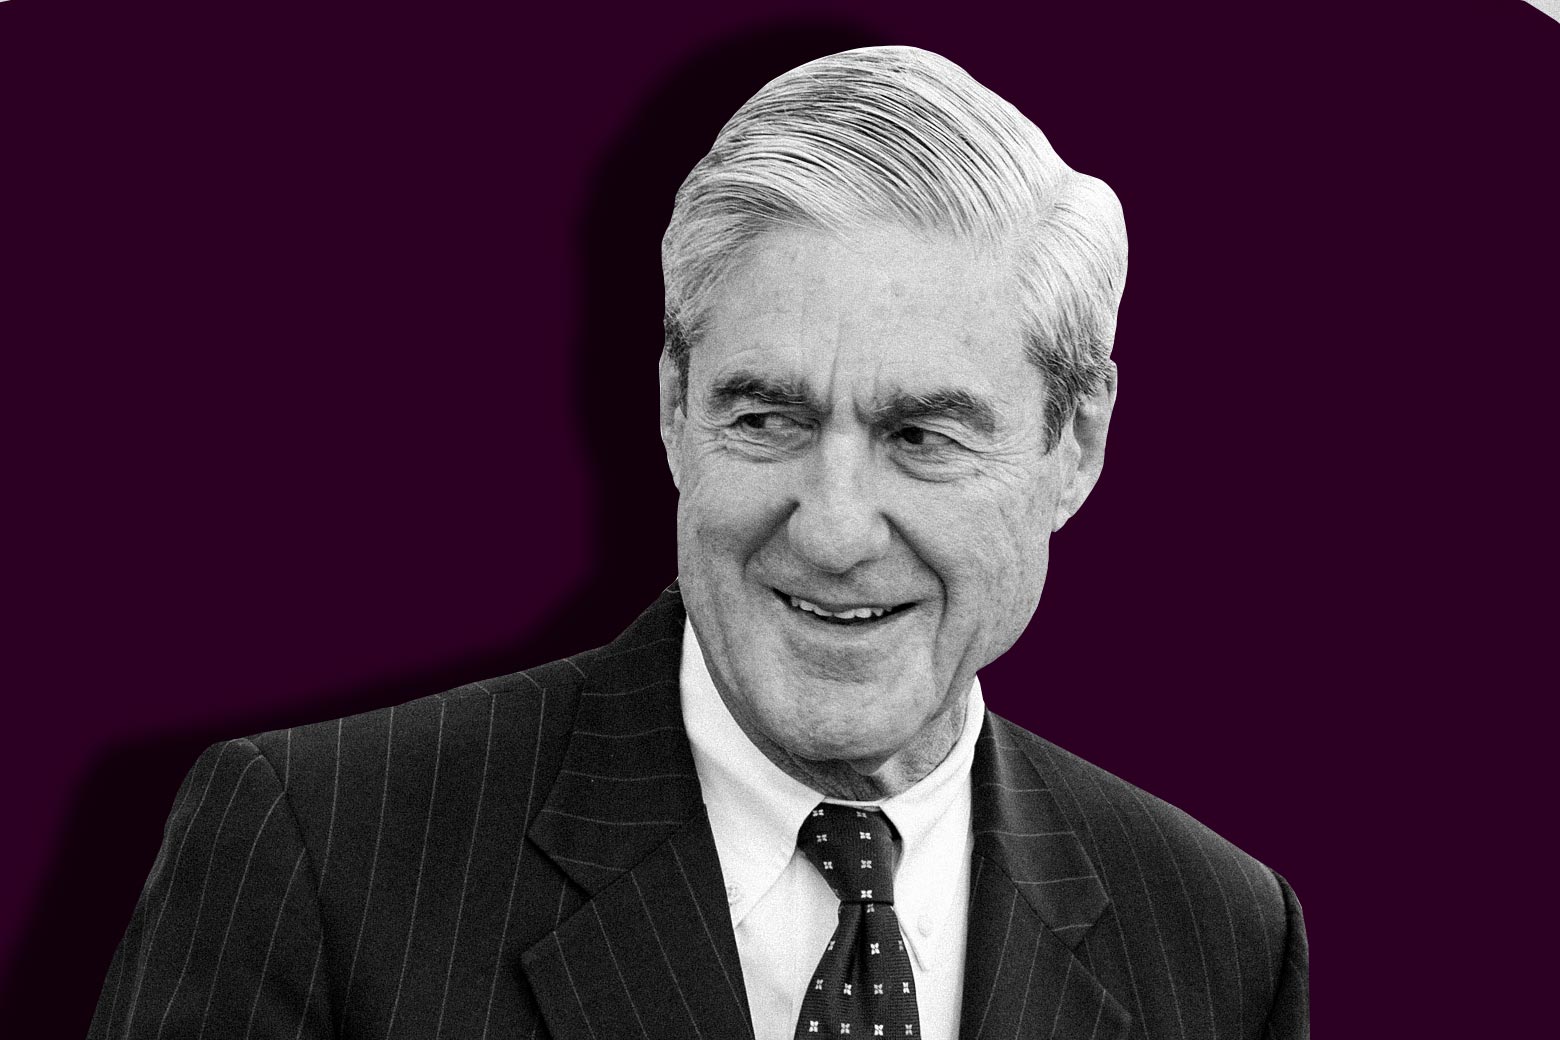 Mueller cracking a smile.